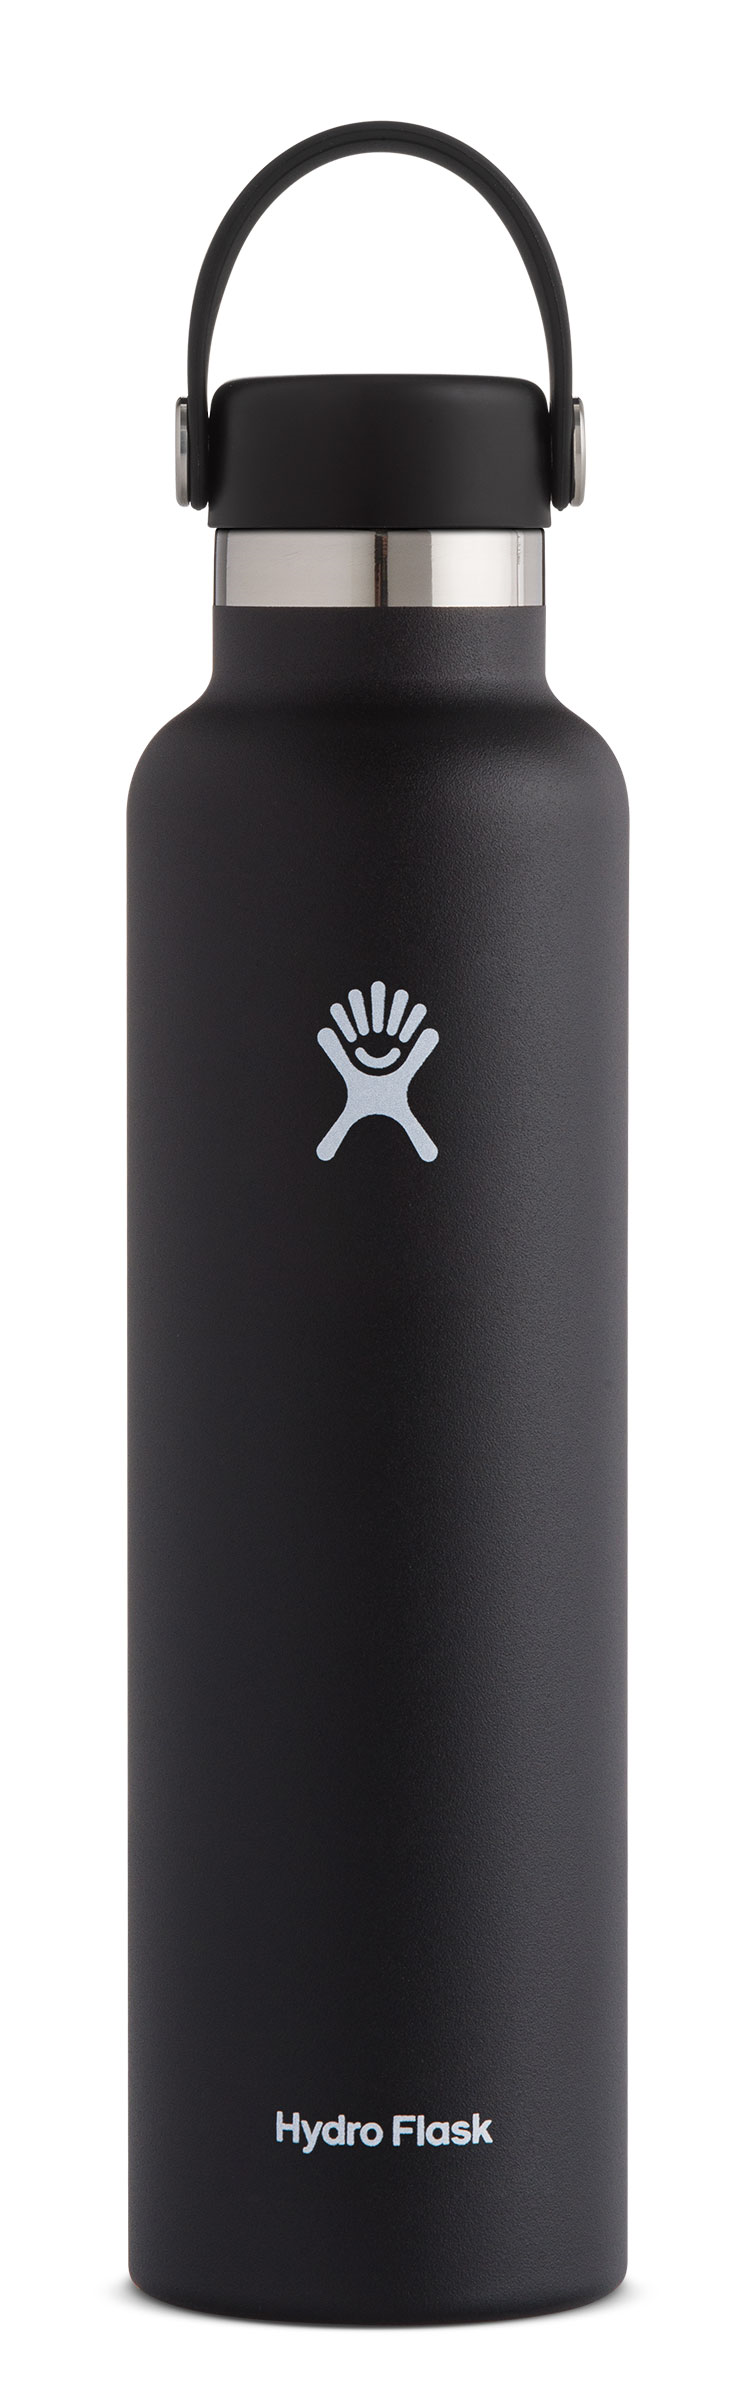 Hydro Flask Bottle 24 oz Standard Mouth - Black